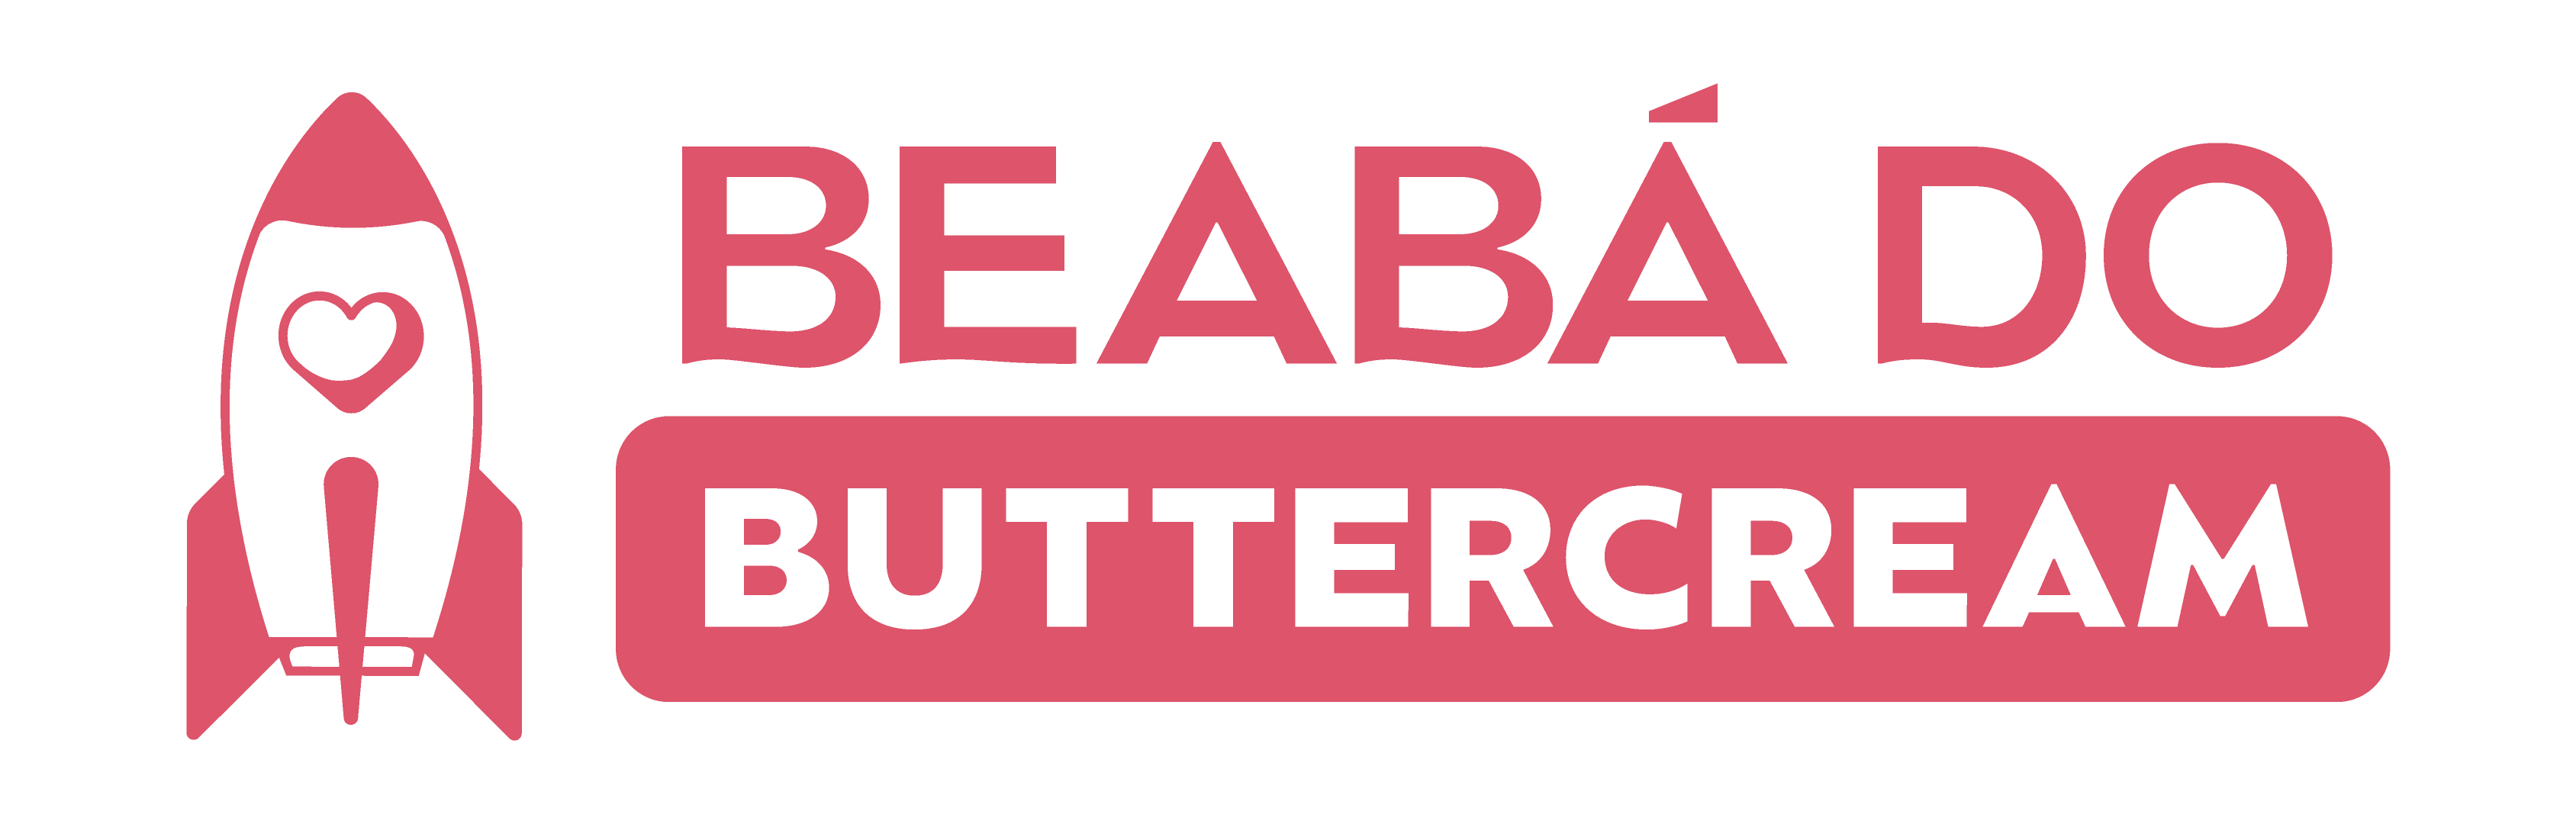 BeabáDoButtercream_Logotipo_1